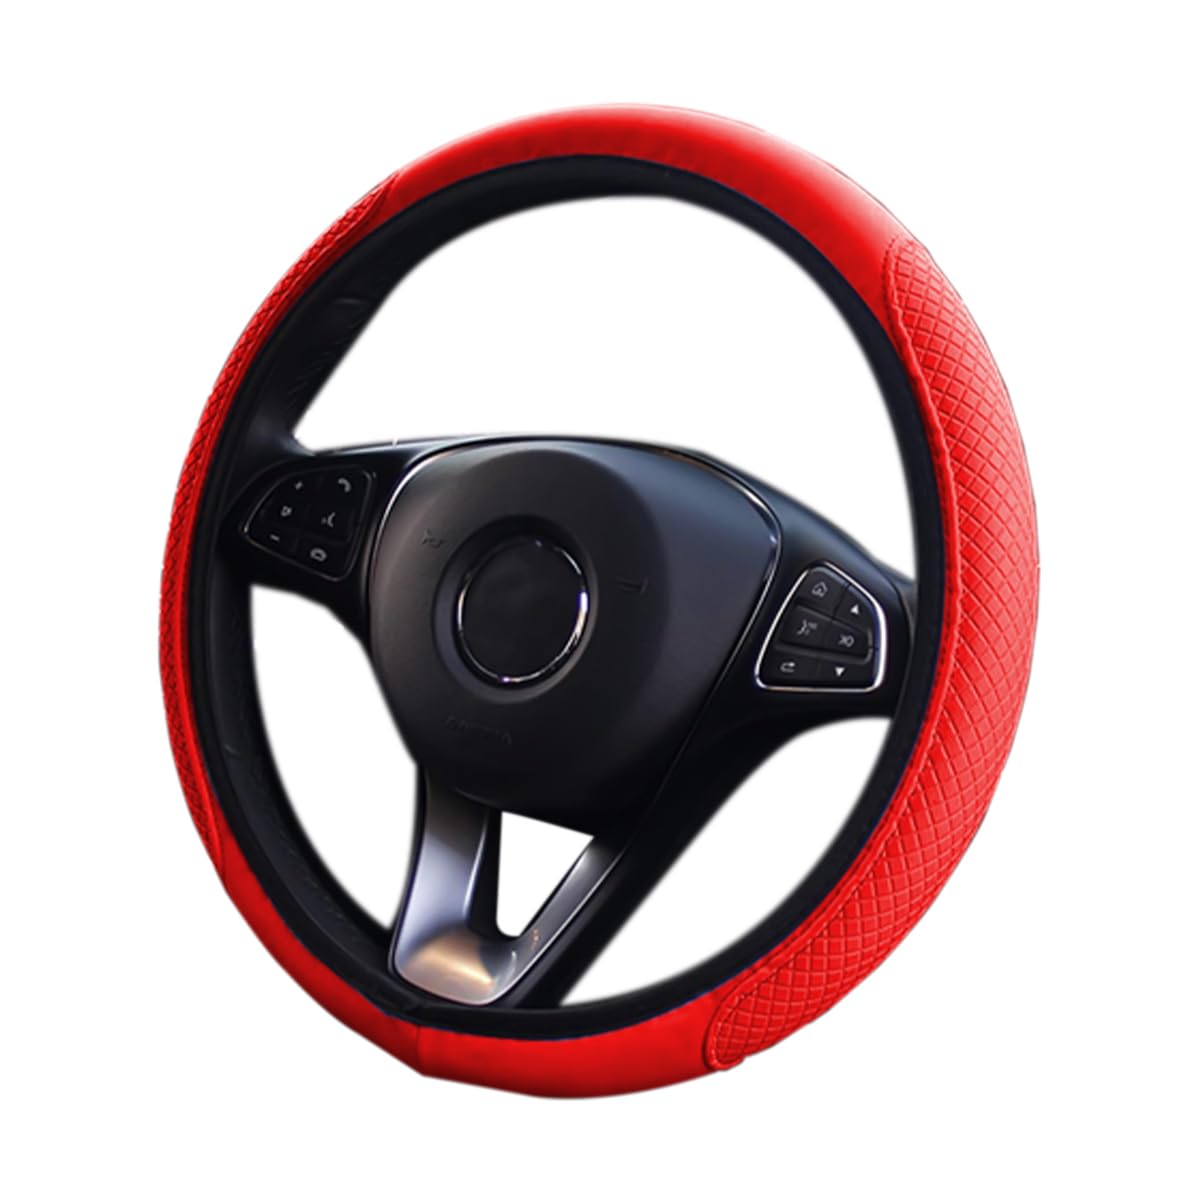 CGEAMDY Auto Lenkrad Abdeckung, Universal 38 cm Microfiber Lenkradhülle, Anti Rutsch Atmungsaktiv Lenkradabdeckung, Geruch frei Lenkradbezug Lenkradschoner(Rot) von CGEAMDY